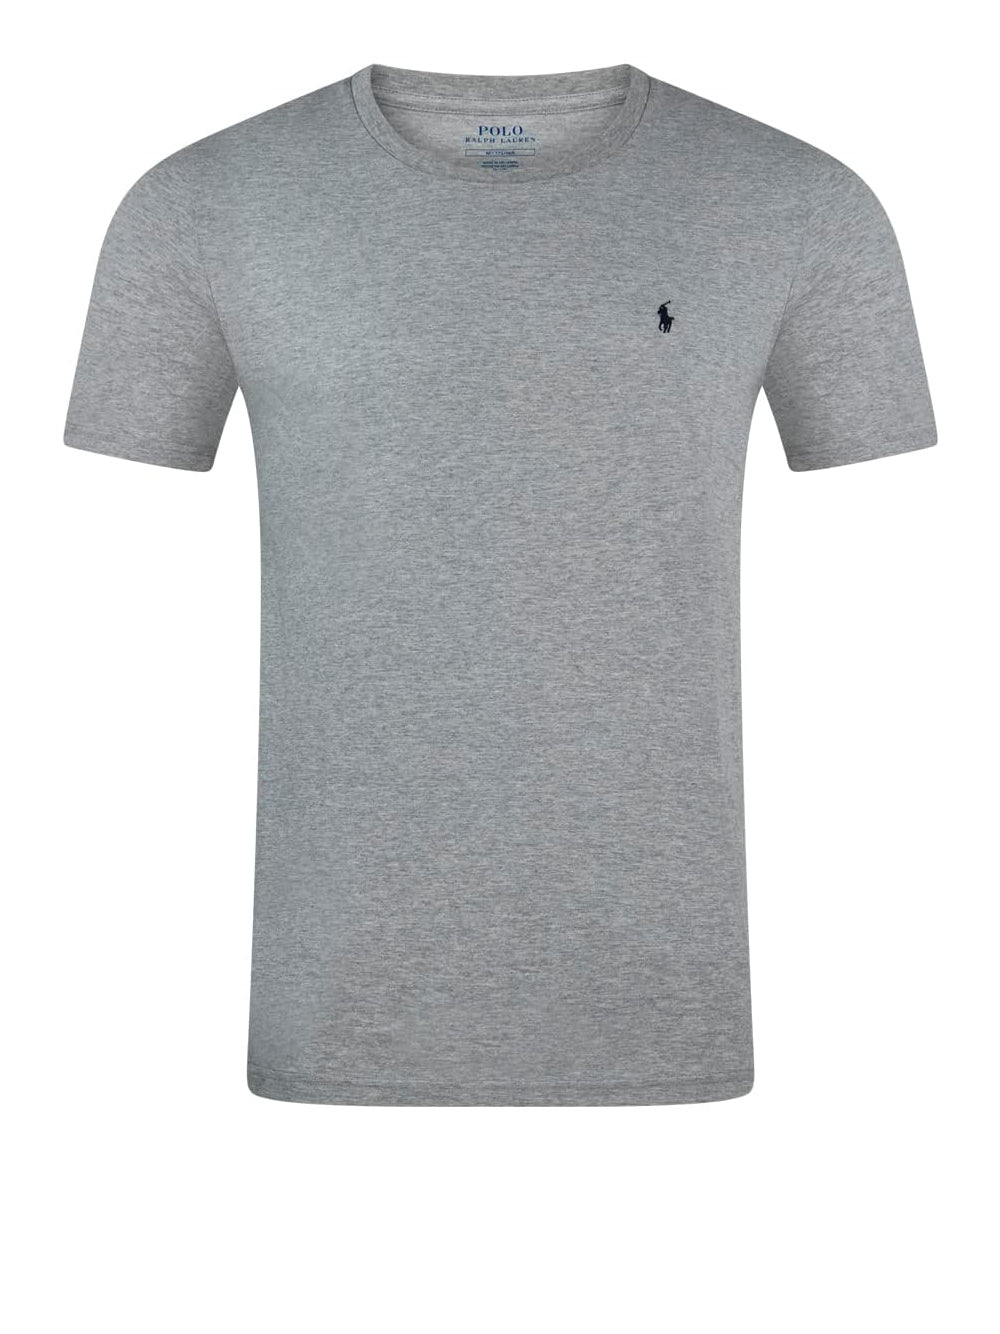 RALPH LAUREN T-shirt Uomo - Grigio modello S/S CREW-TOP